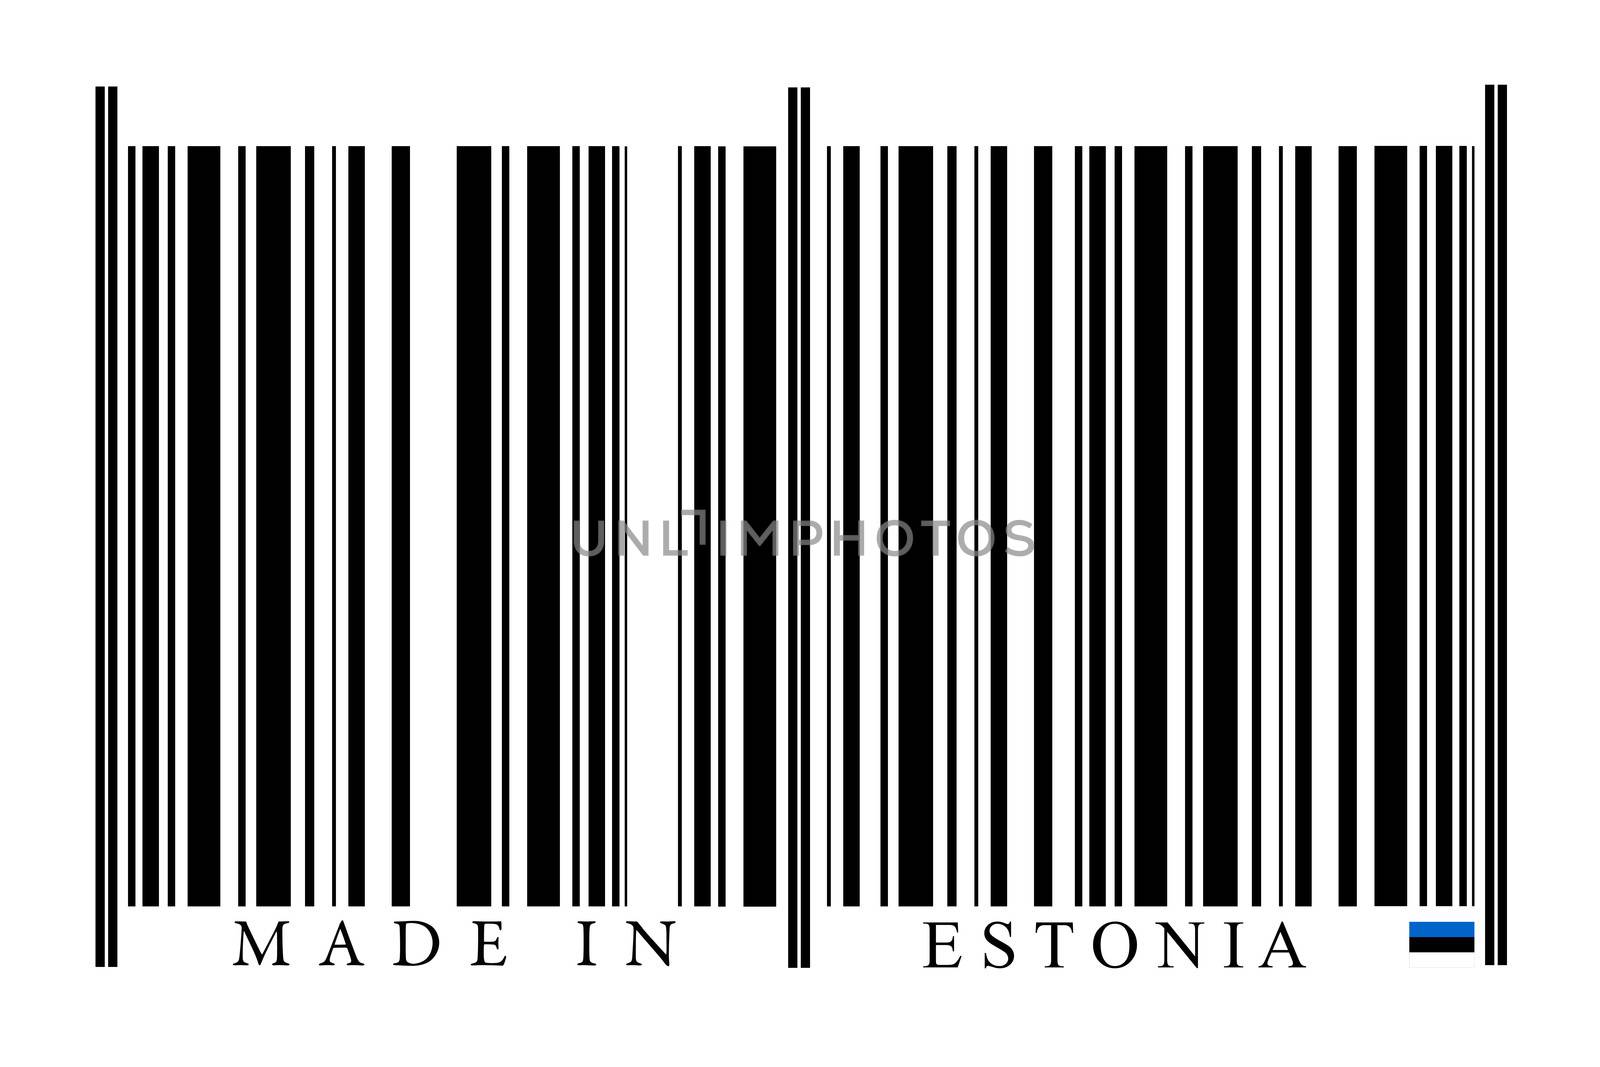 Estonia Barcode by gemenacom